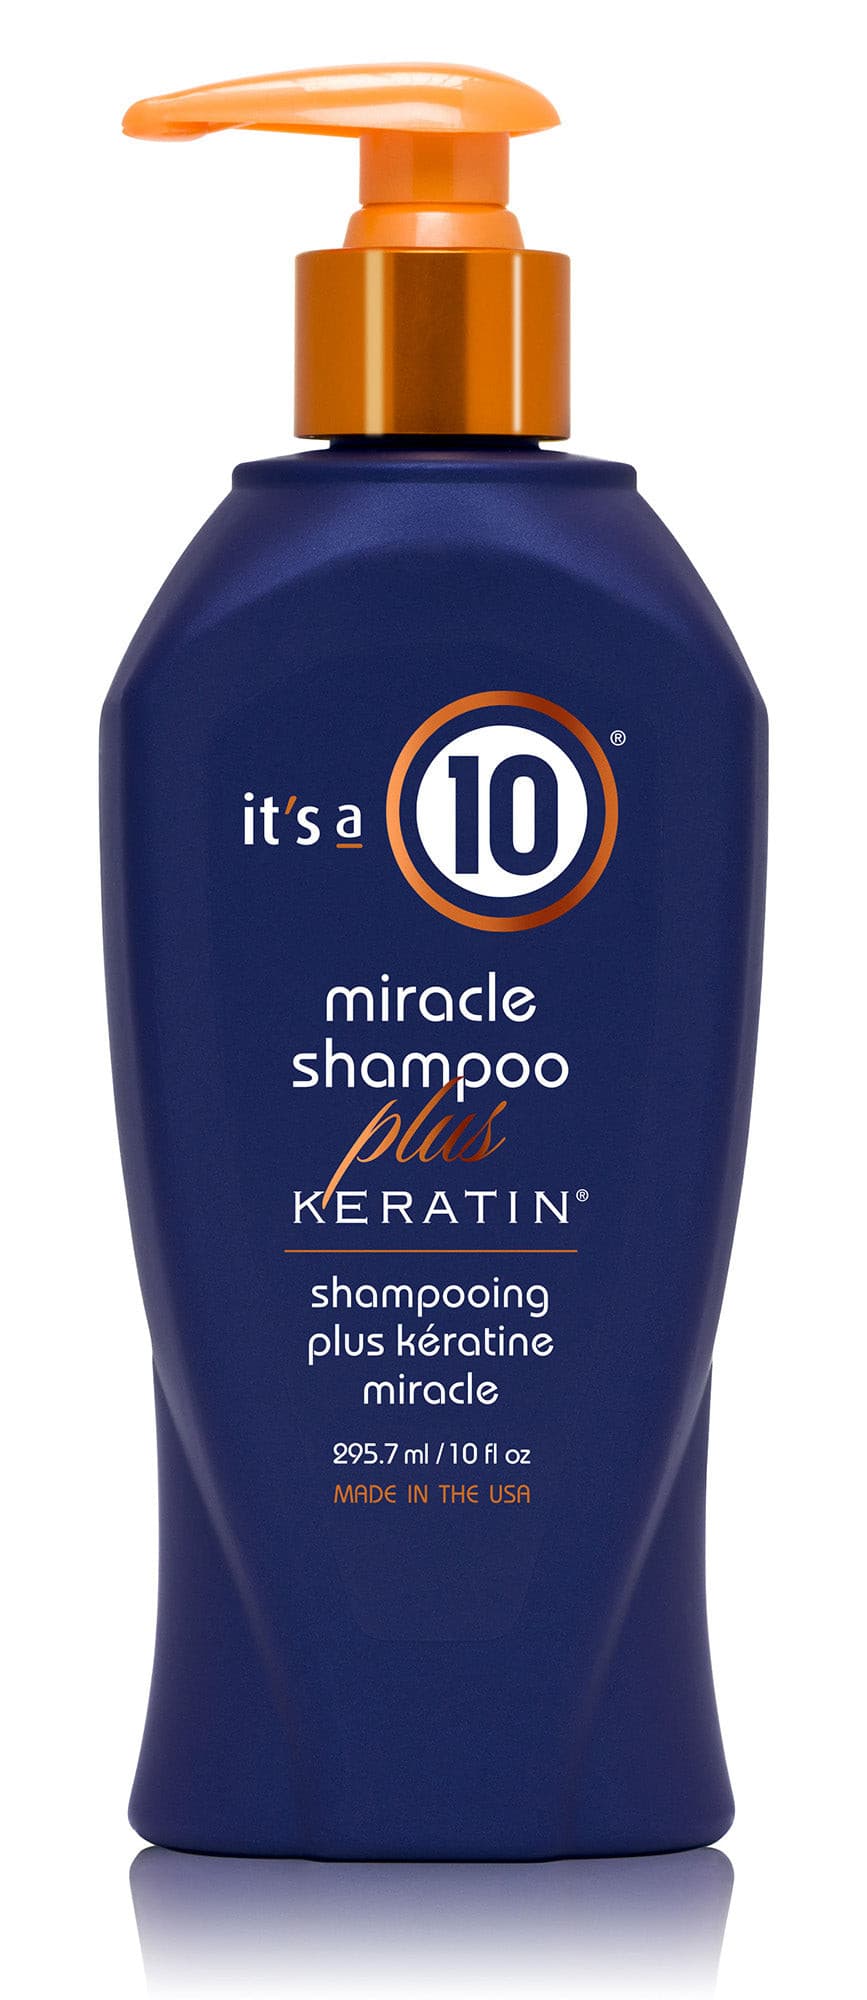 10 Miracle Shampoo Plus Keratin